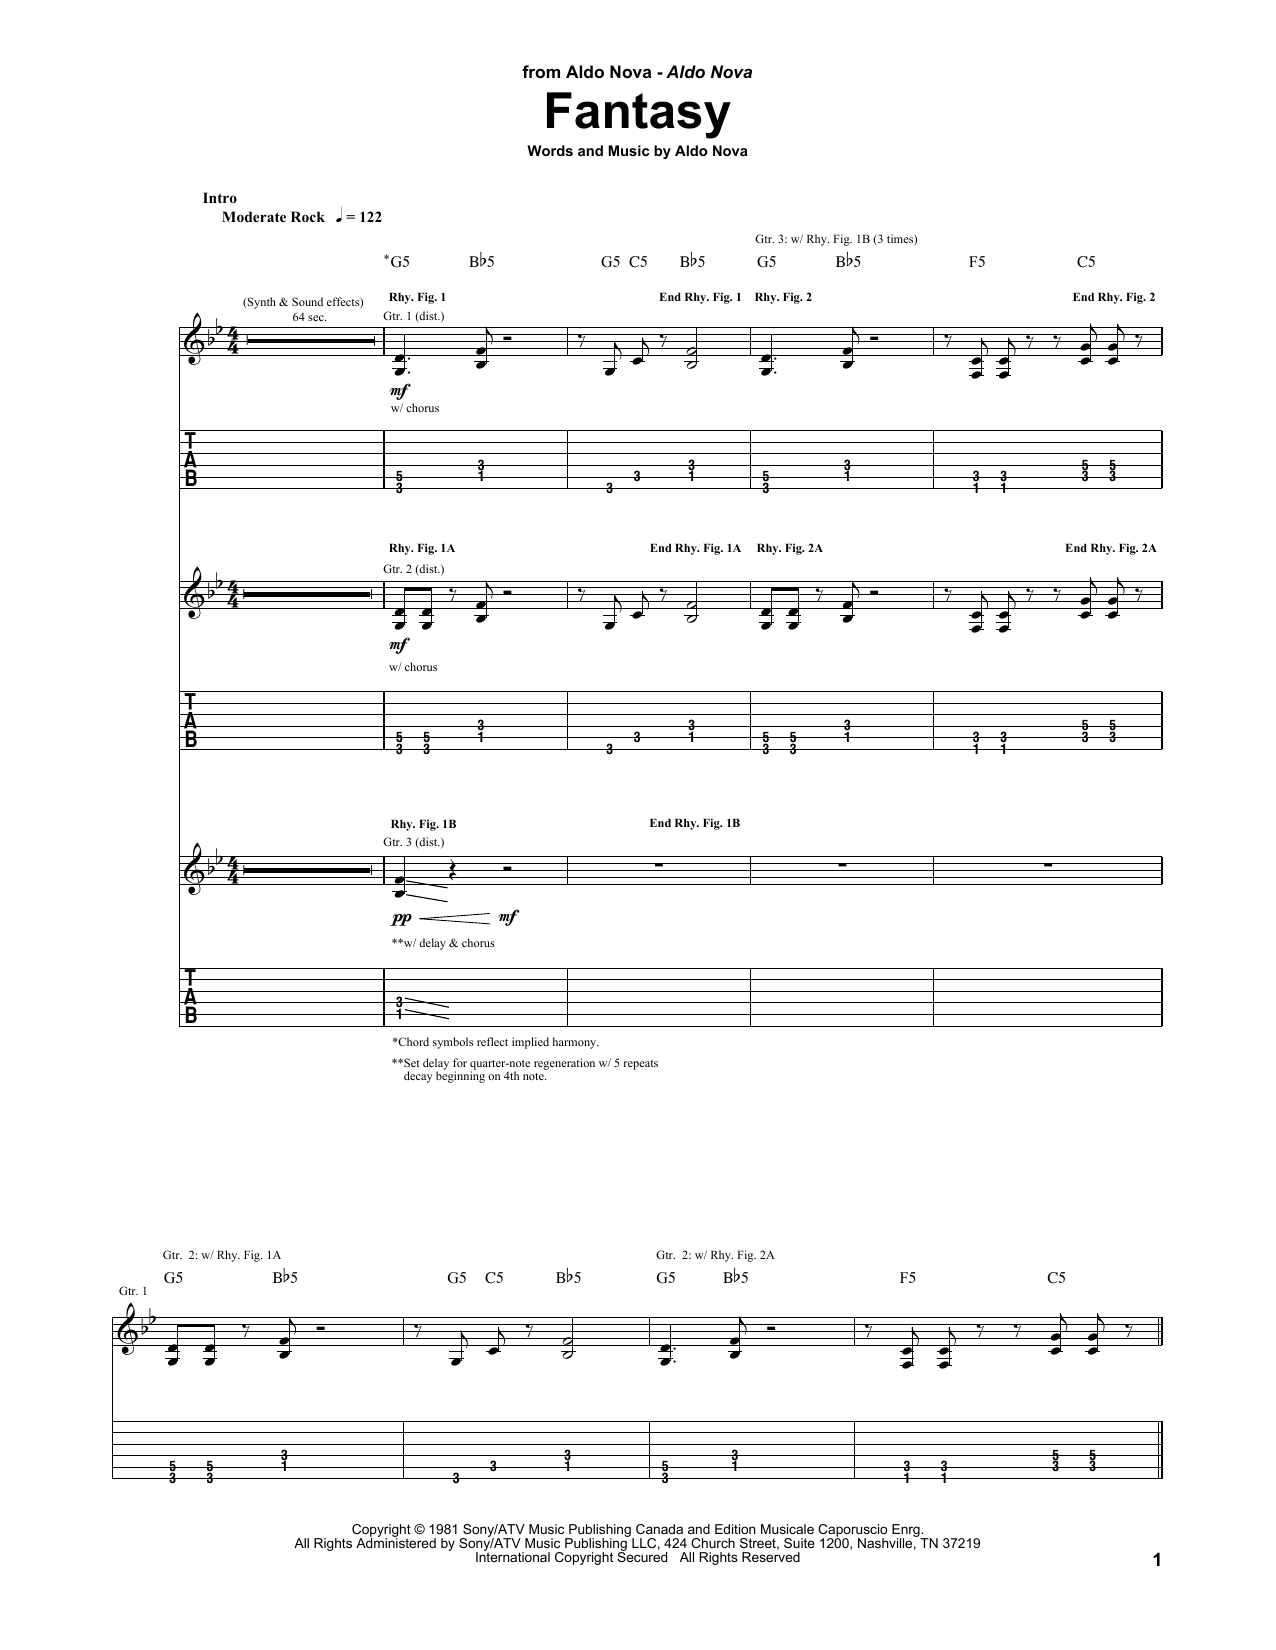 Aldo Nova Fantasy Sheet Music Notes & Chords for Guitar Lead Sheet - Download or Print PDF